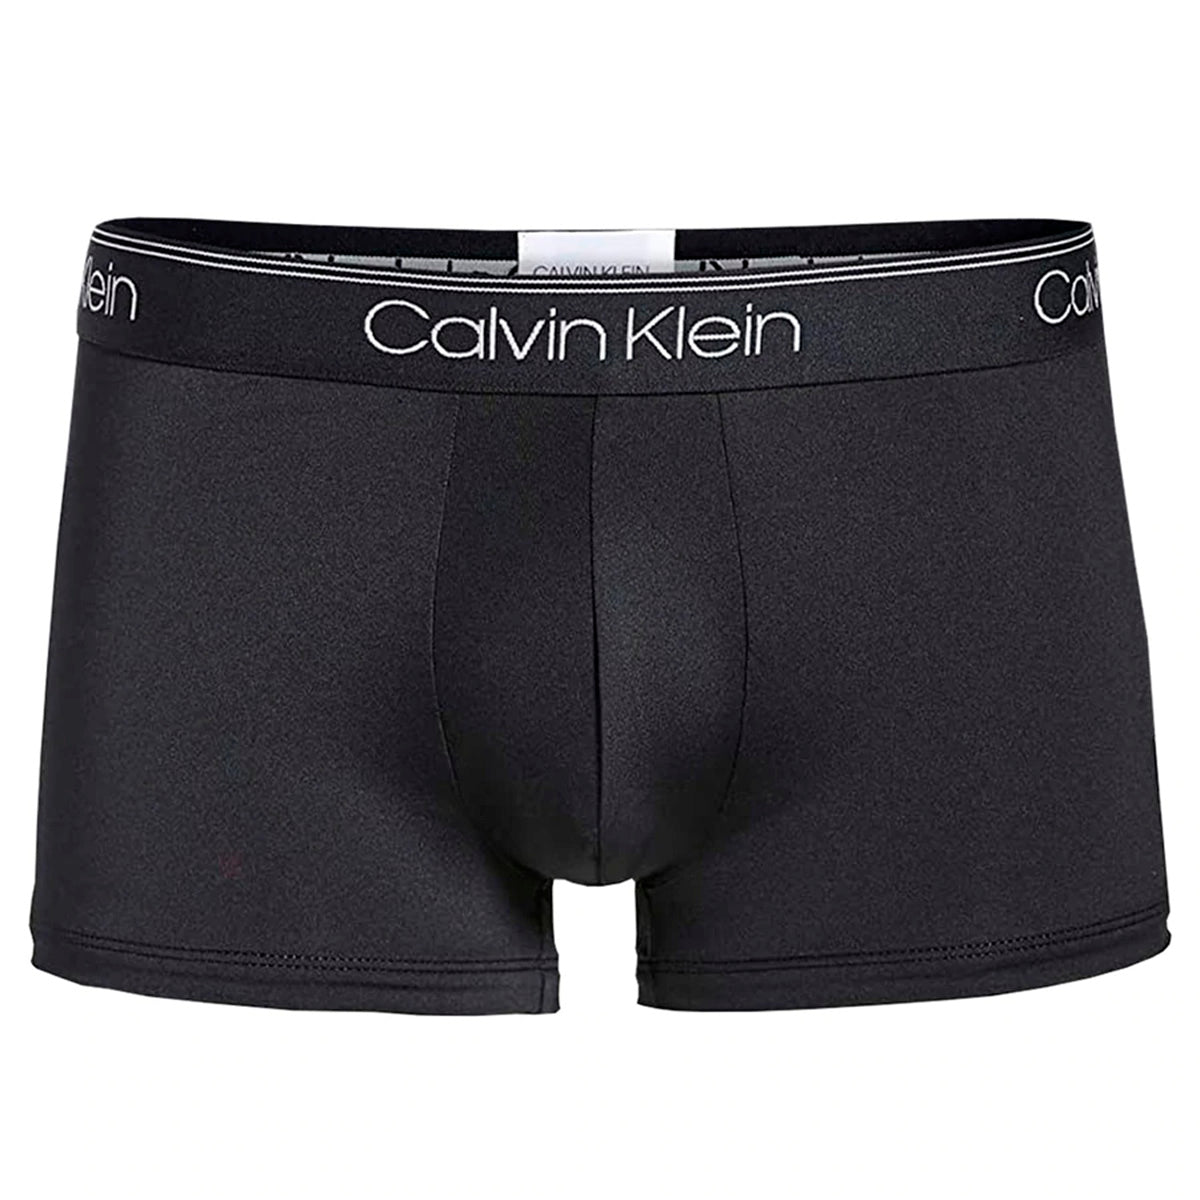 Boxer court Calvin Klein taille basse noir